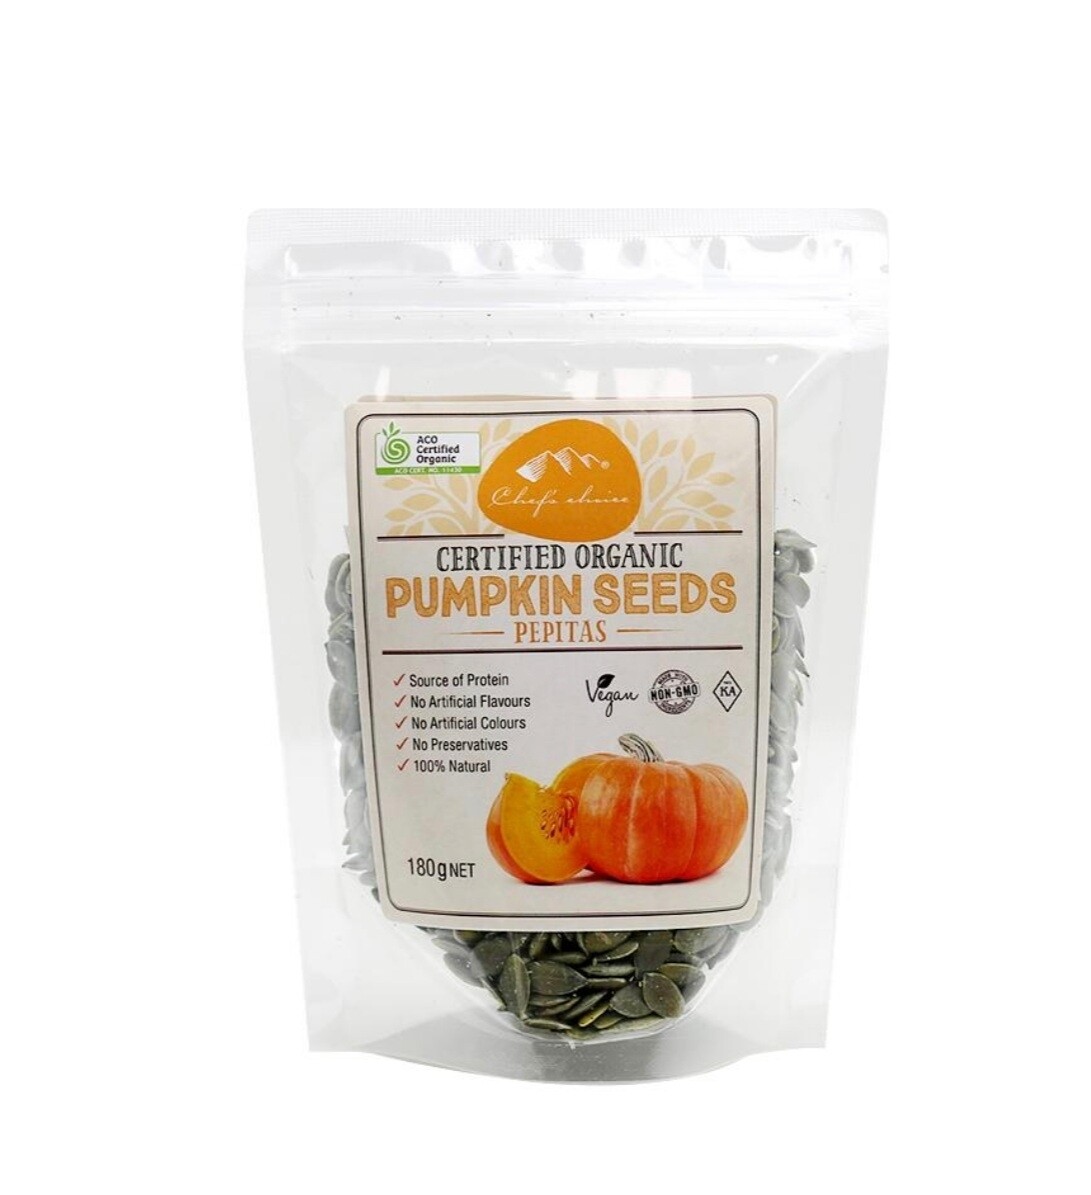 Chef's Choice Organic Pumpkin Seeds Pepitas 180g